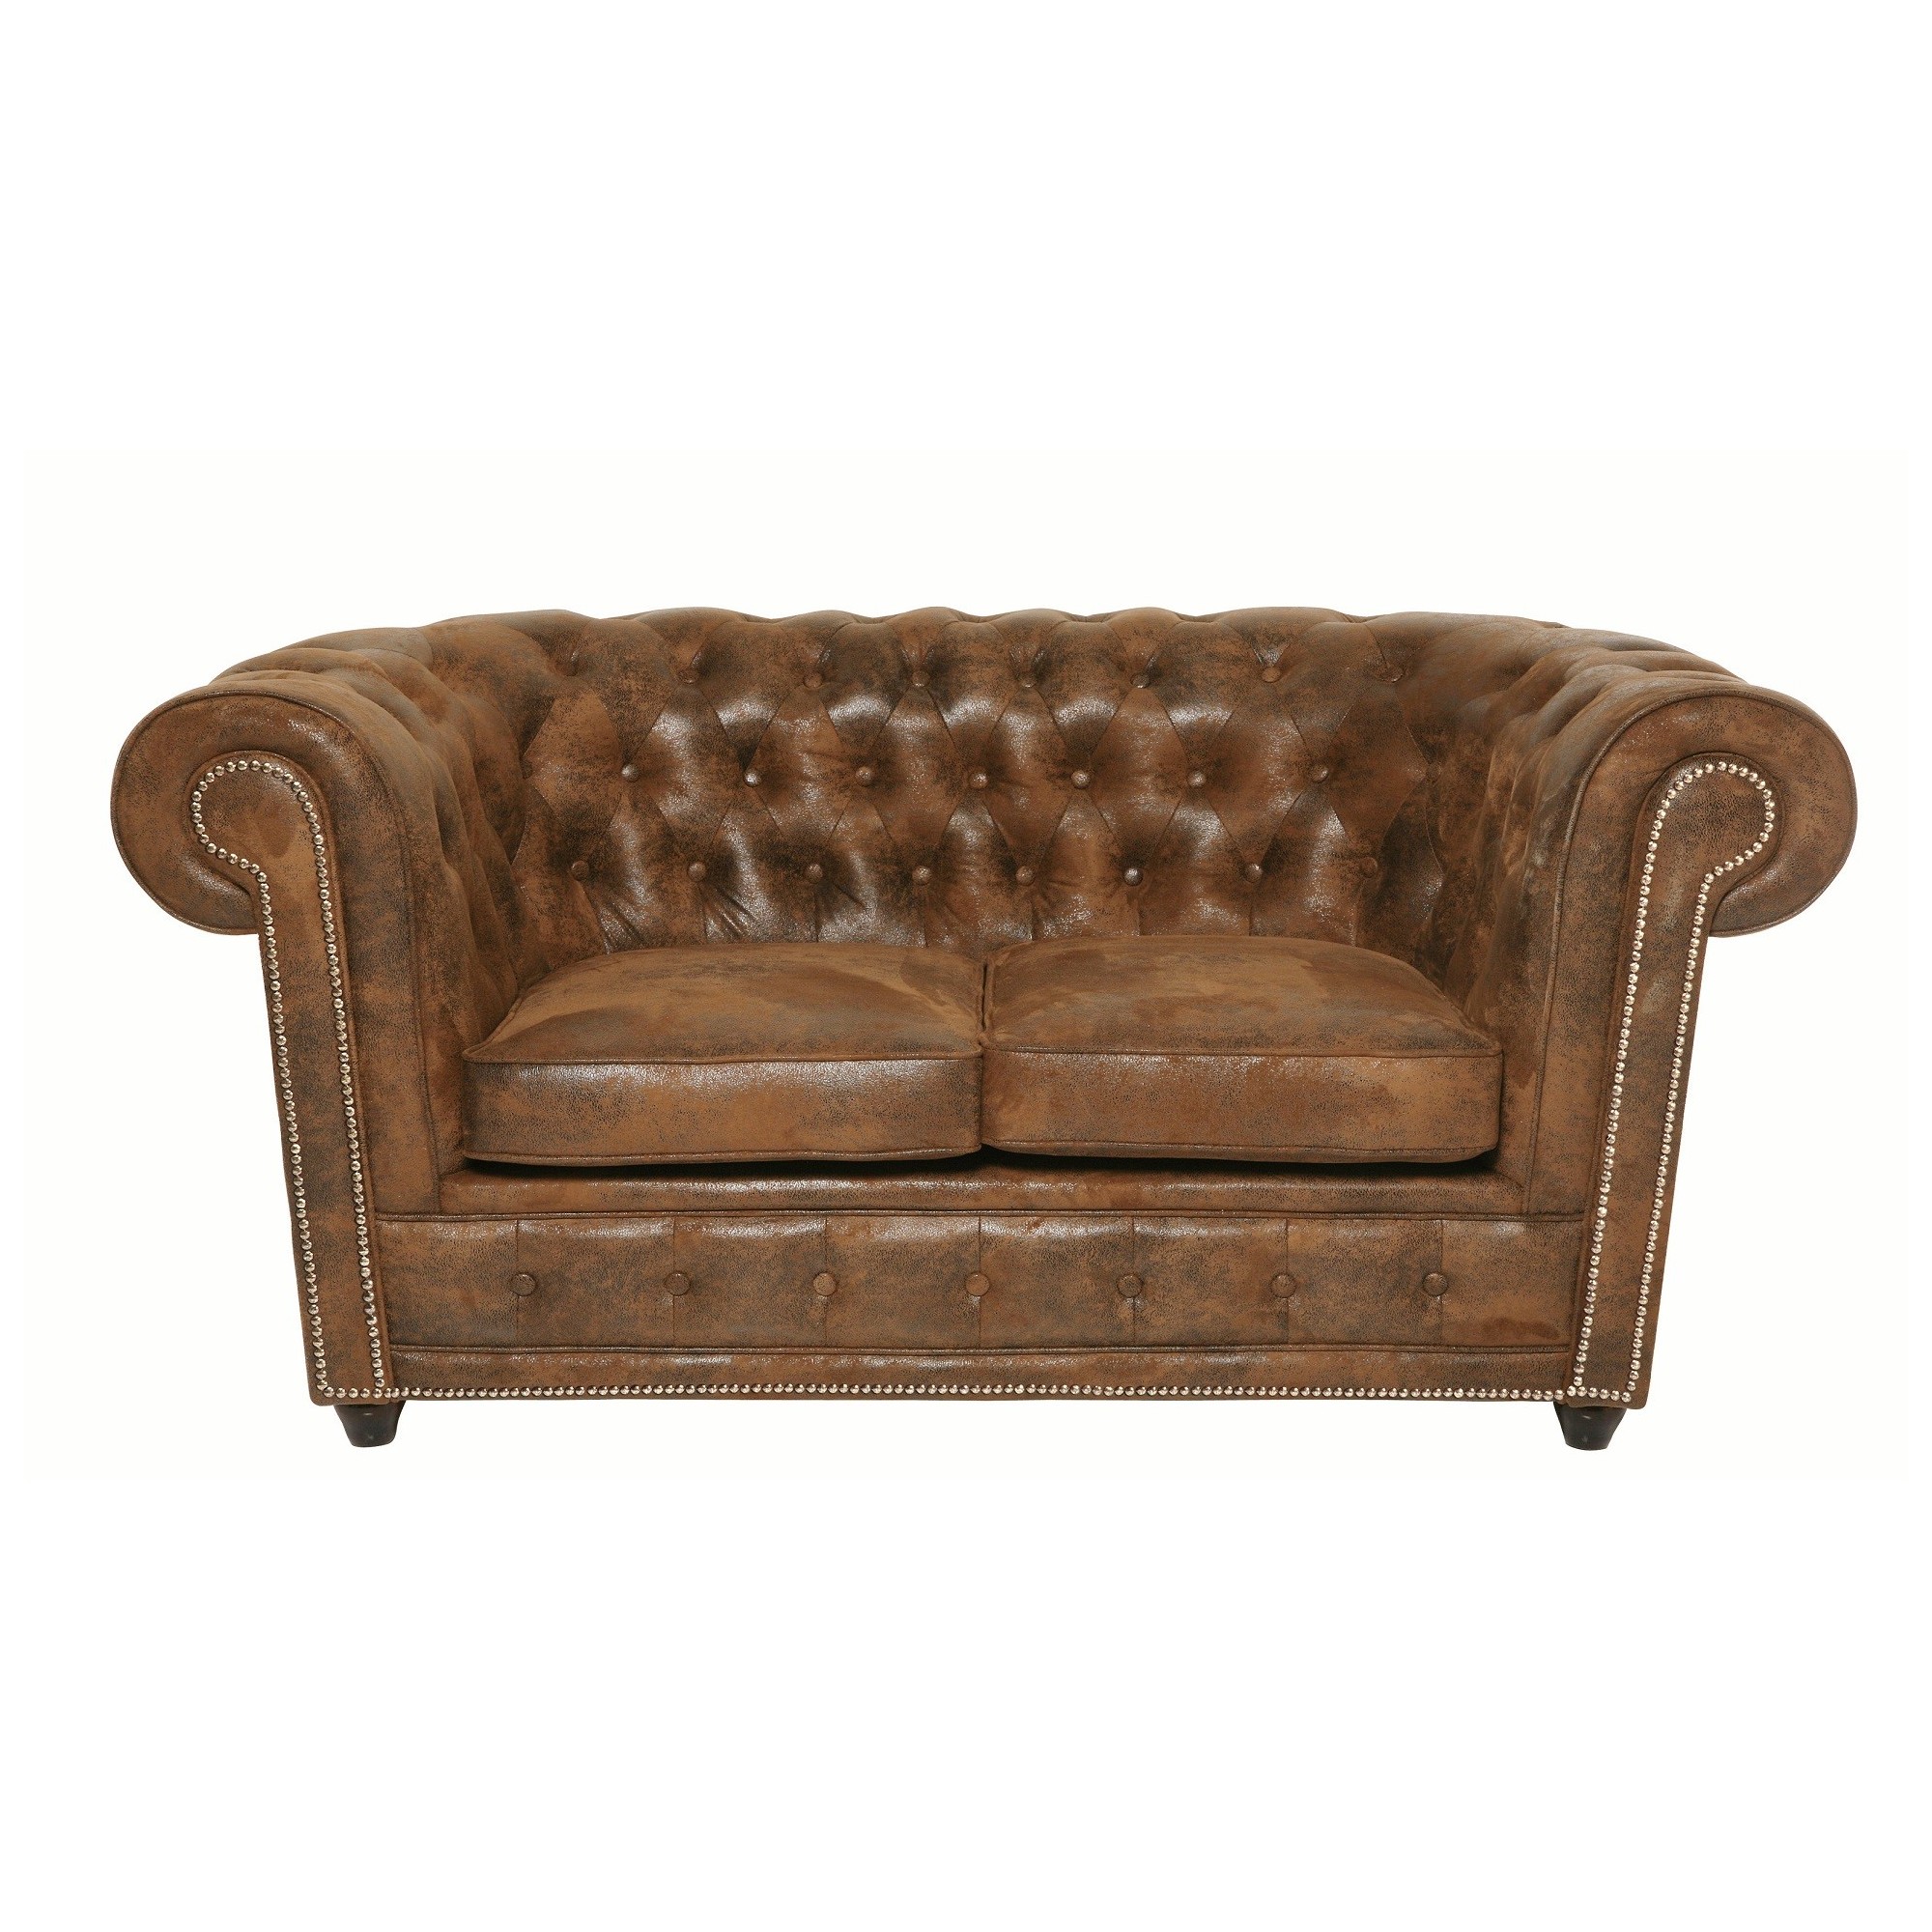 Sofa Cambridge 2-Seater Vintage econo Kare Design